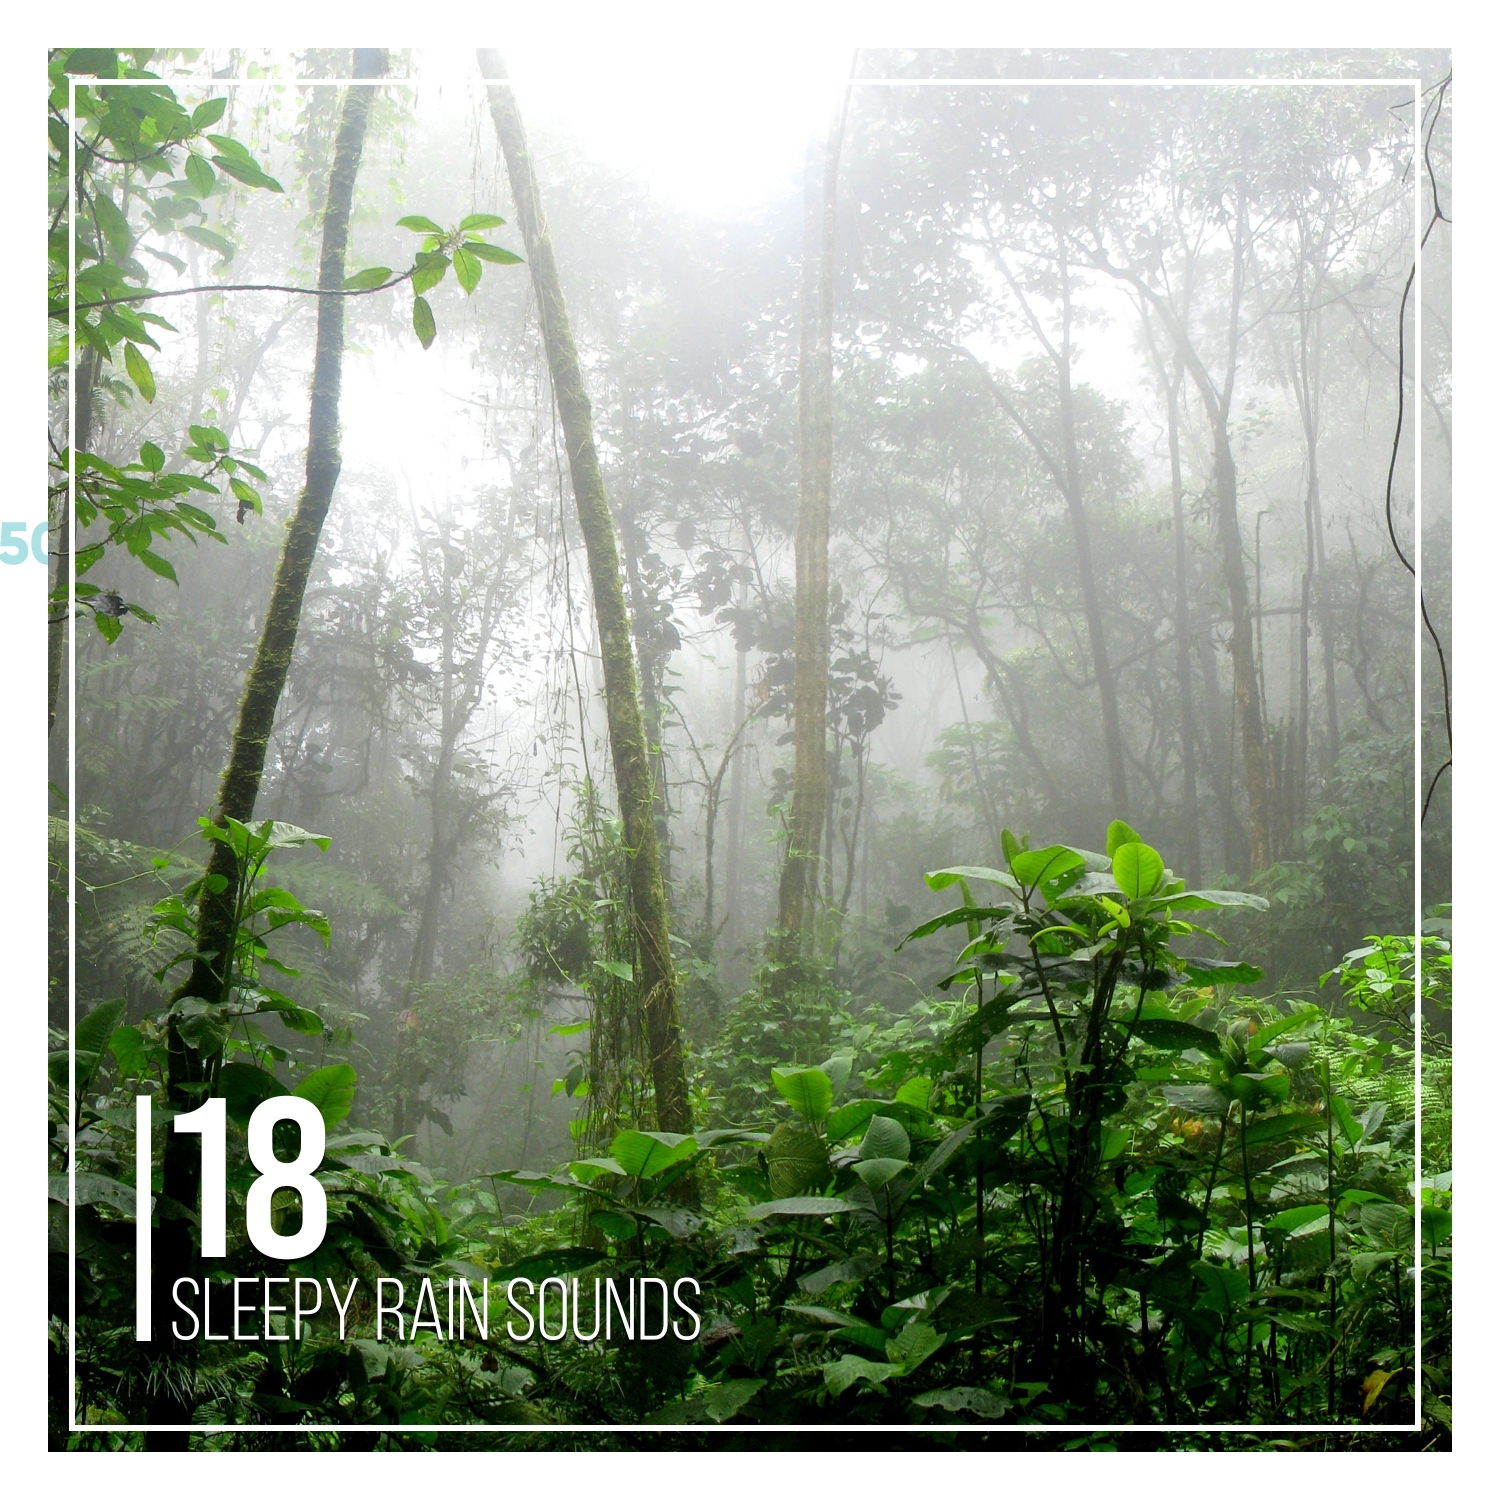 18 Sleepy Rain Sounds - Nature, Ocean and Water Sounds